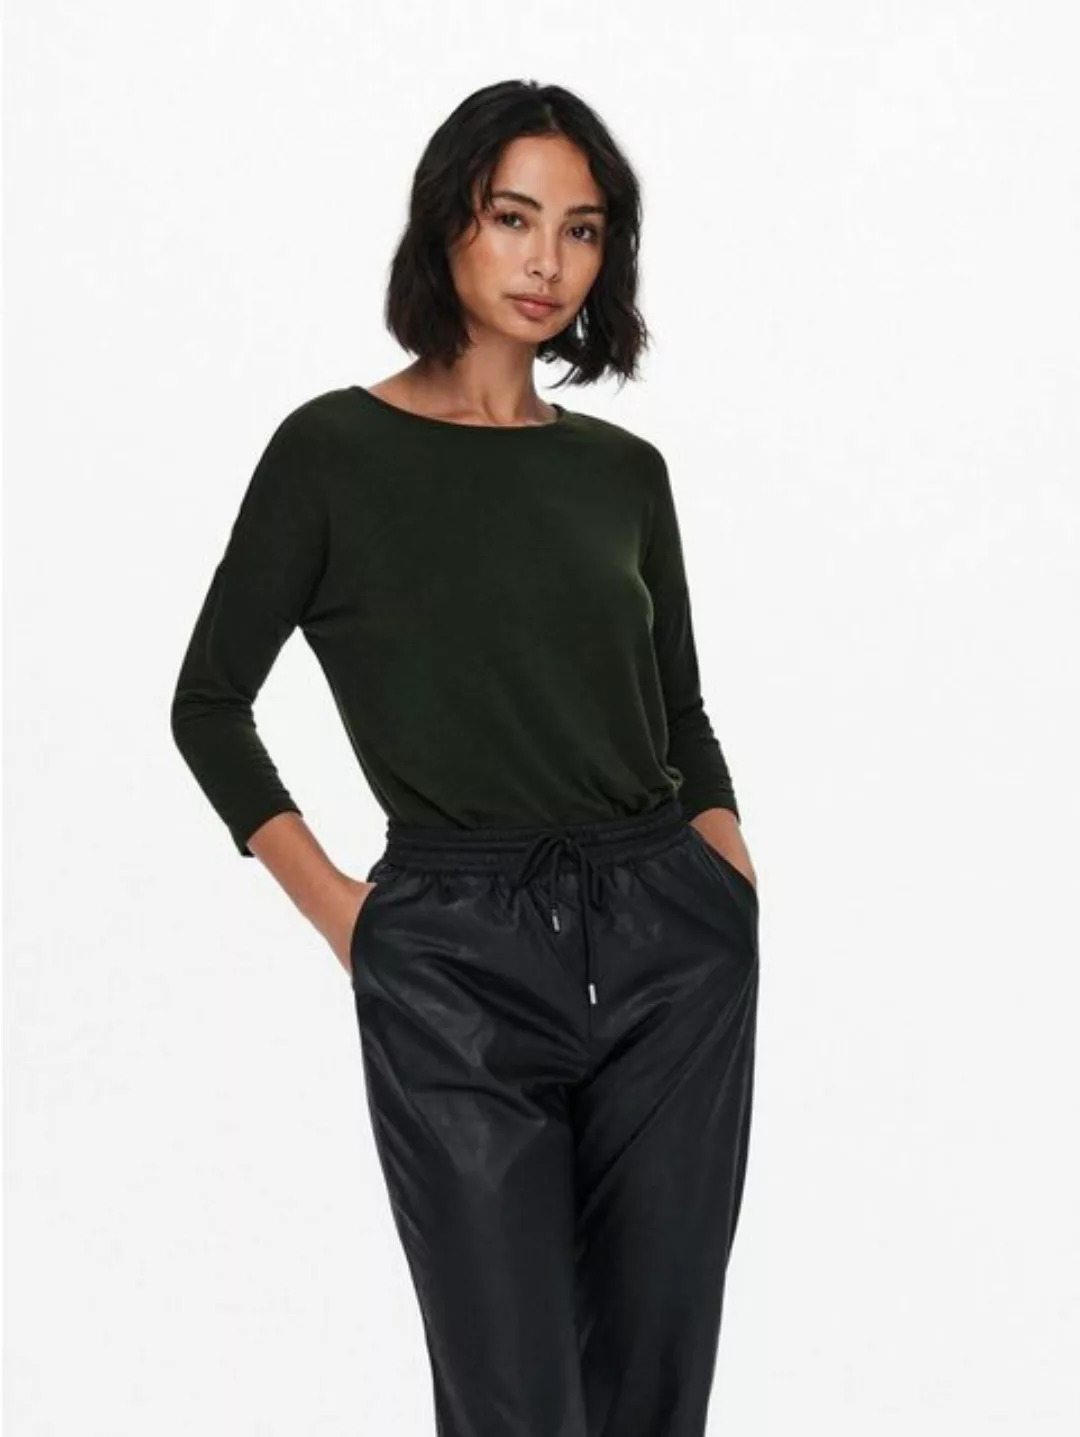 ONLY Strickpullover Dünner Strickpullover 3/4 Langarm Shirt Basic Sweater O günstig online kaufen